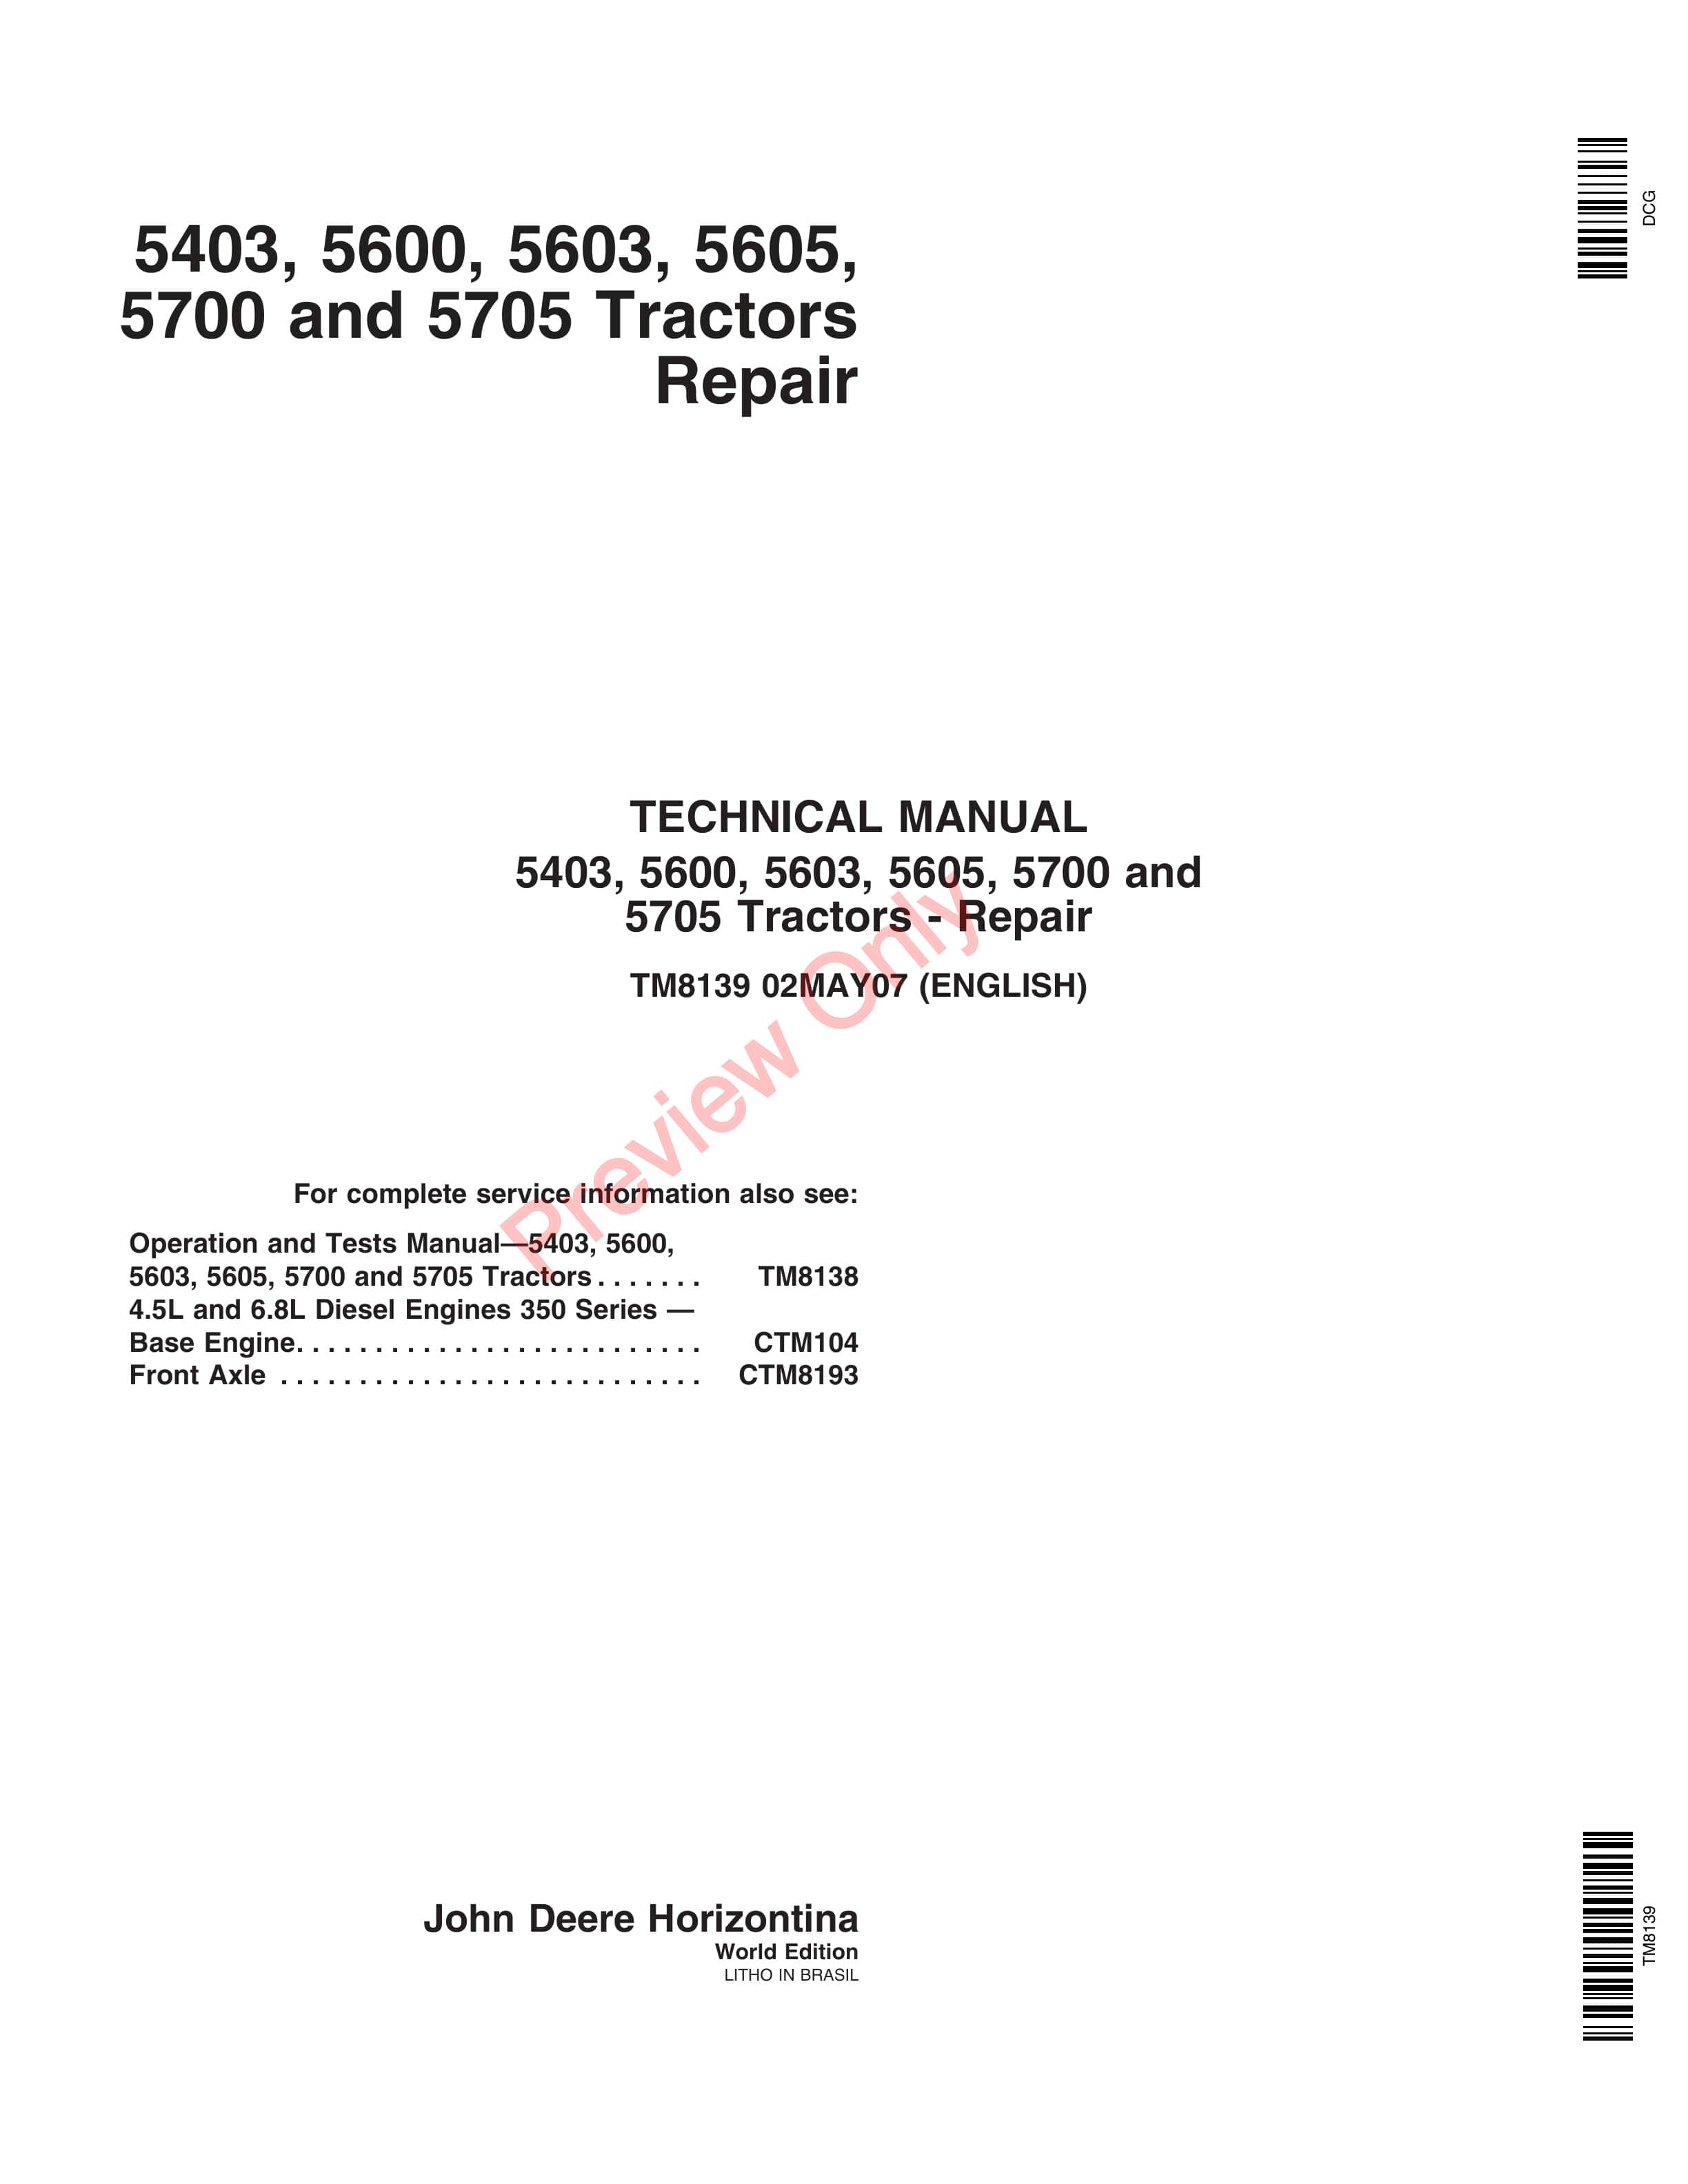 John Deere 5403 5600 5603 5605 5700 5705 Tractor Technical Manual TM8139 02MAY07 1